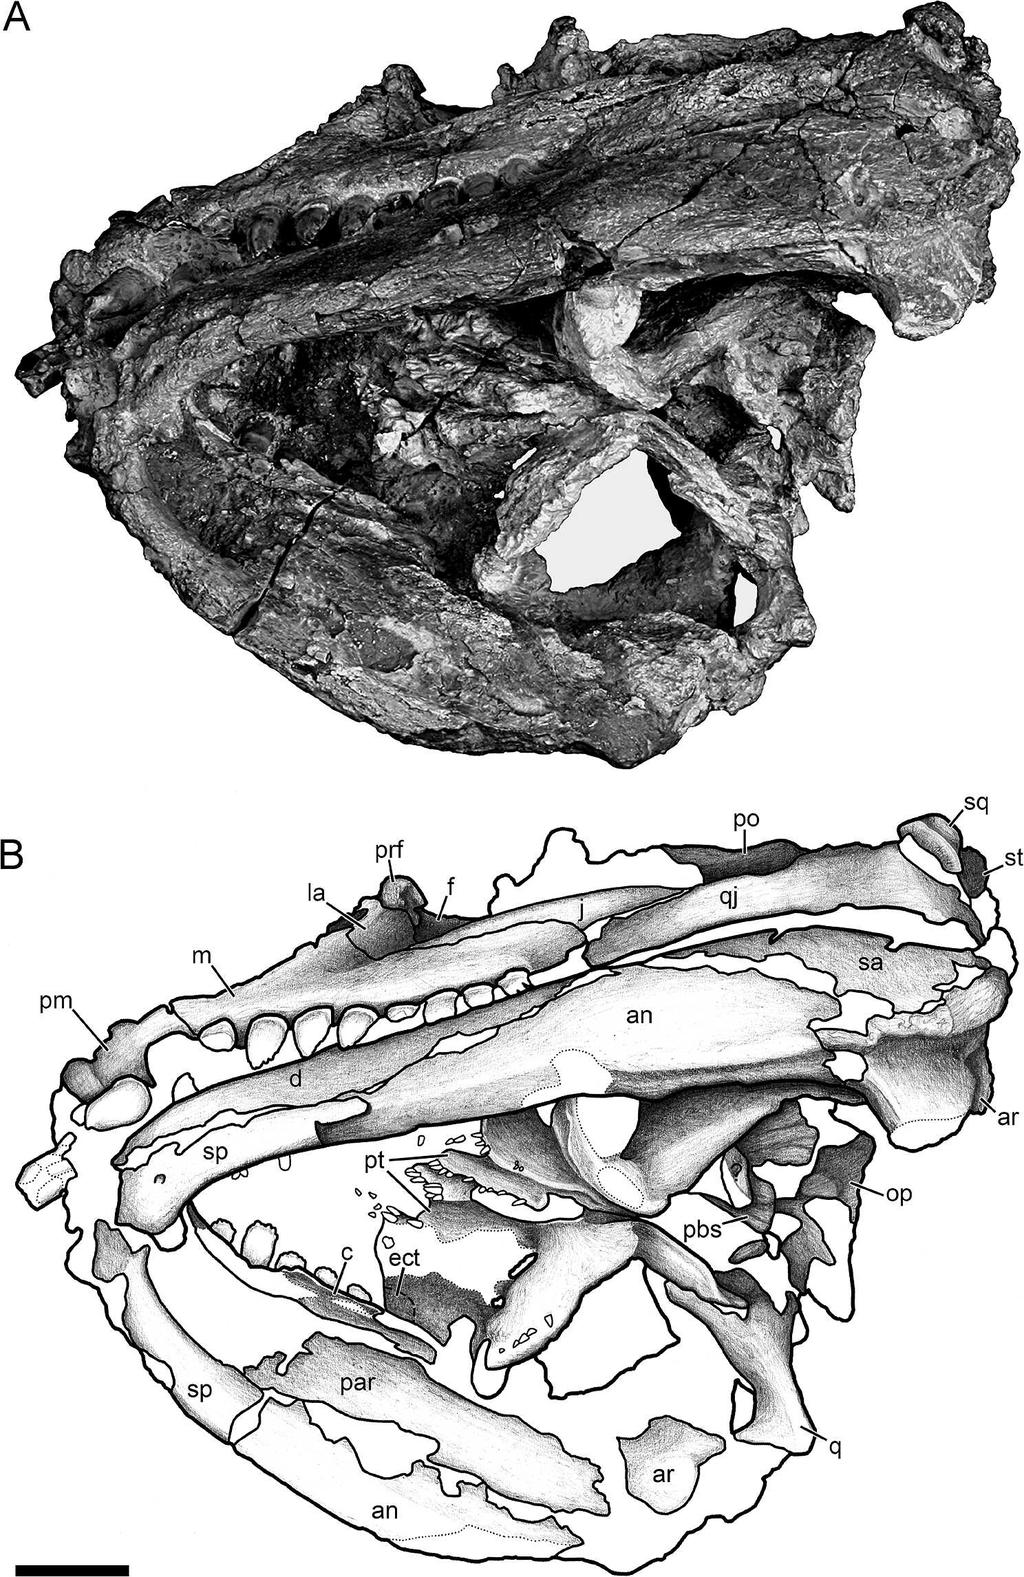 MADDIN ET AL. CRANIAL ANATOMY OF ENNATOSAURUS 165 FIGURE 4. 2 cm. Ennatosaurus tecton (PIN 4543/1) in ventral view. A, photograph; B, line drawing. Abbreviations given in Figure 1.